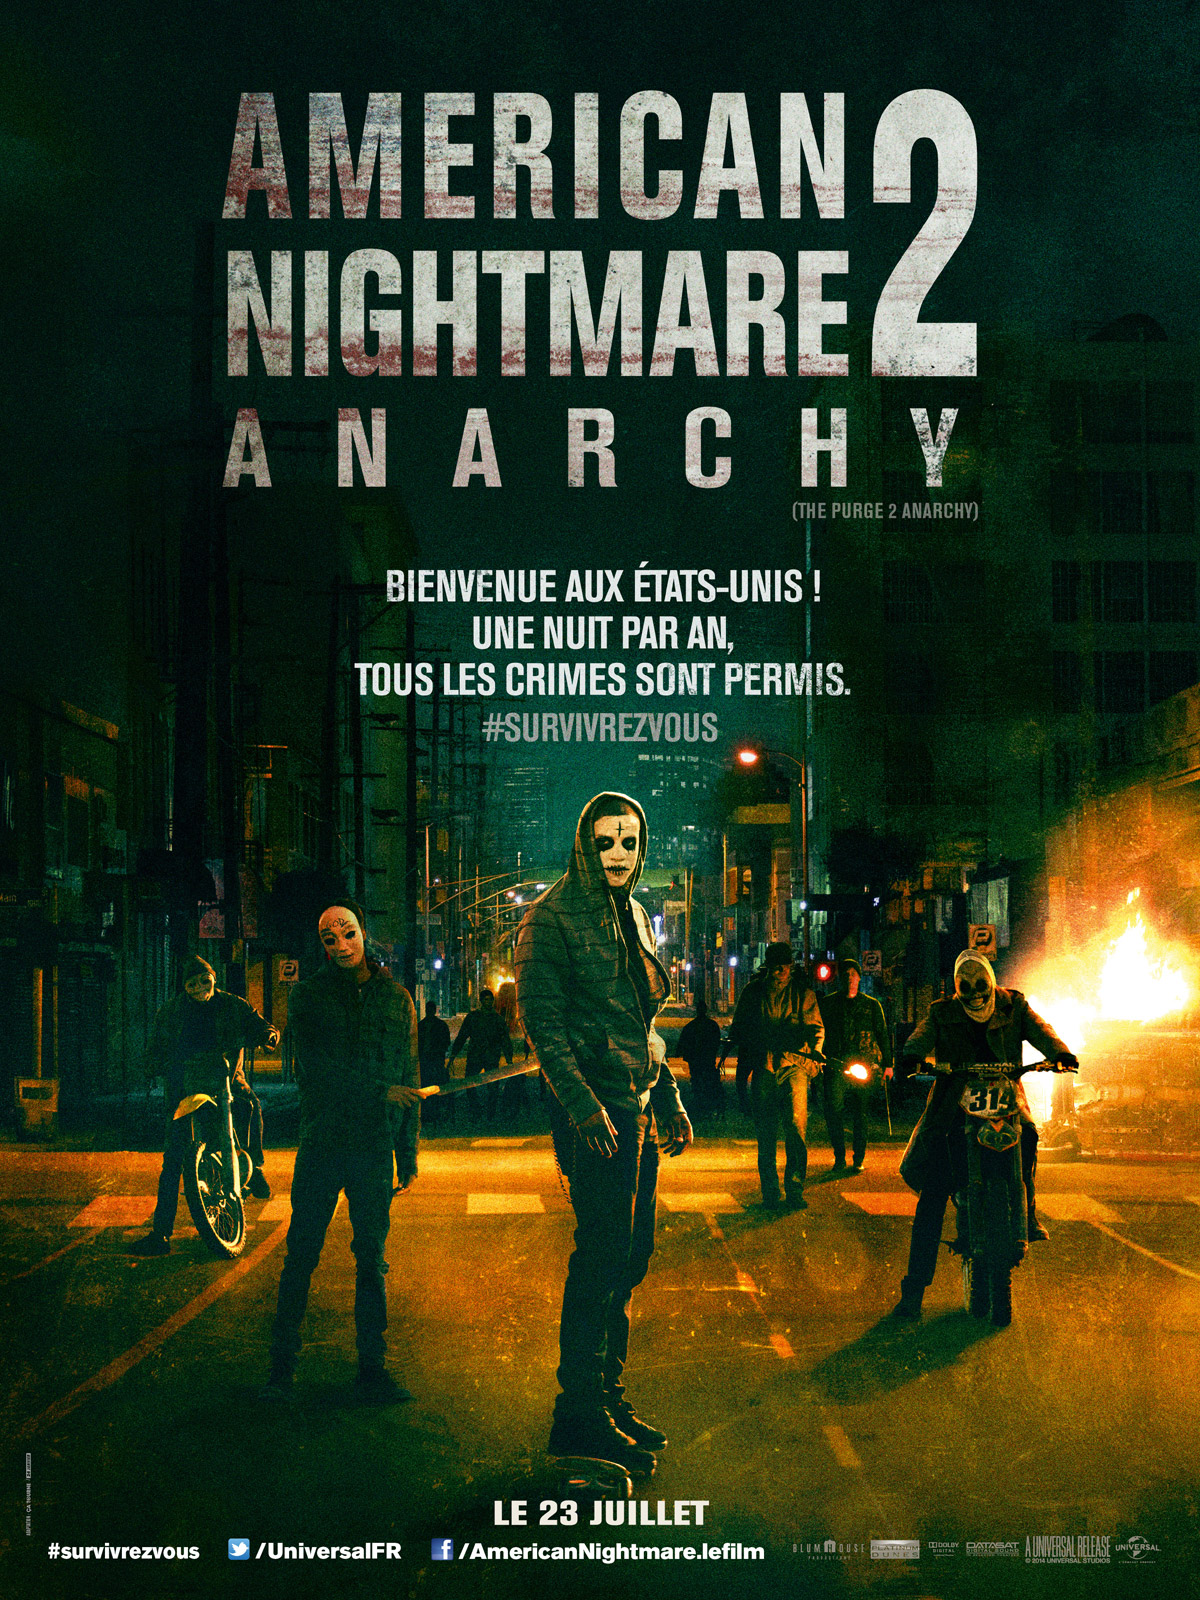 american nightmare 2 - American Nightmare 2 : Anarchy, viens, à la maison american nightmare purge 2